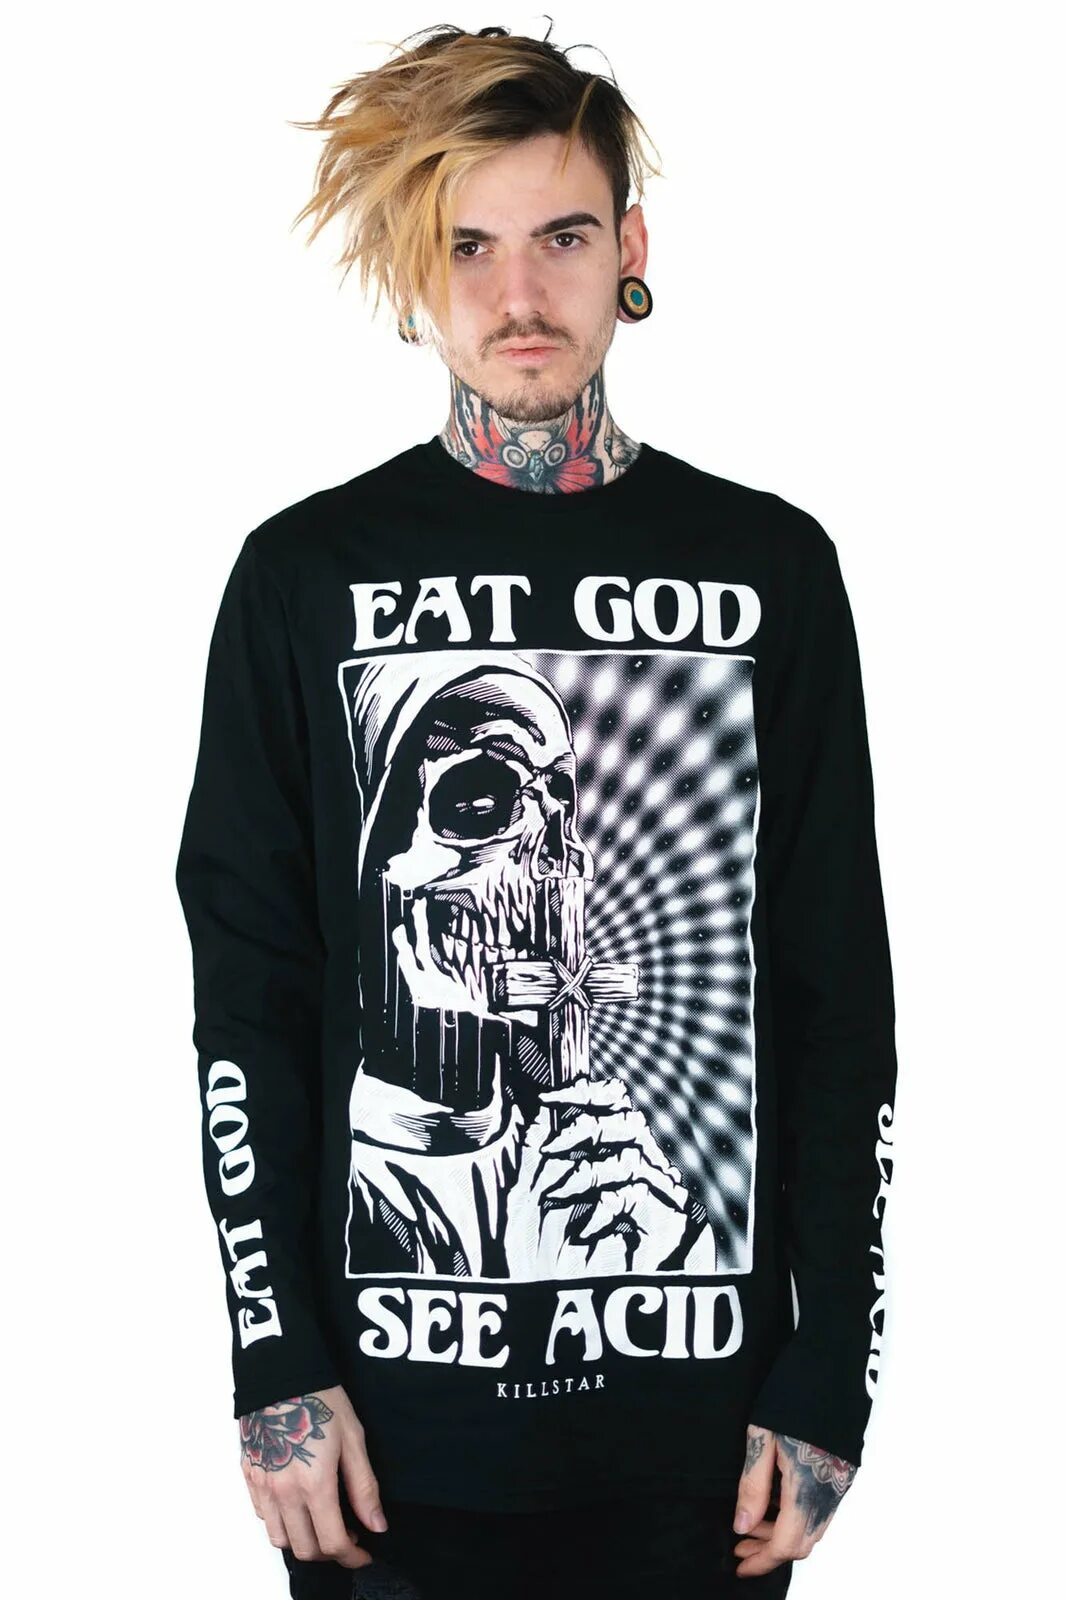 Eat acid see God. «Eat the acid»,. Eat God see acid Shirt. TJR eat God.